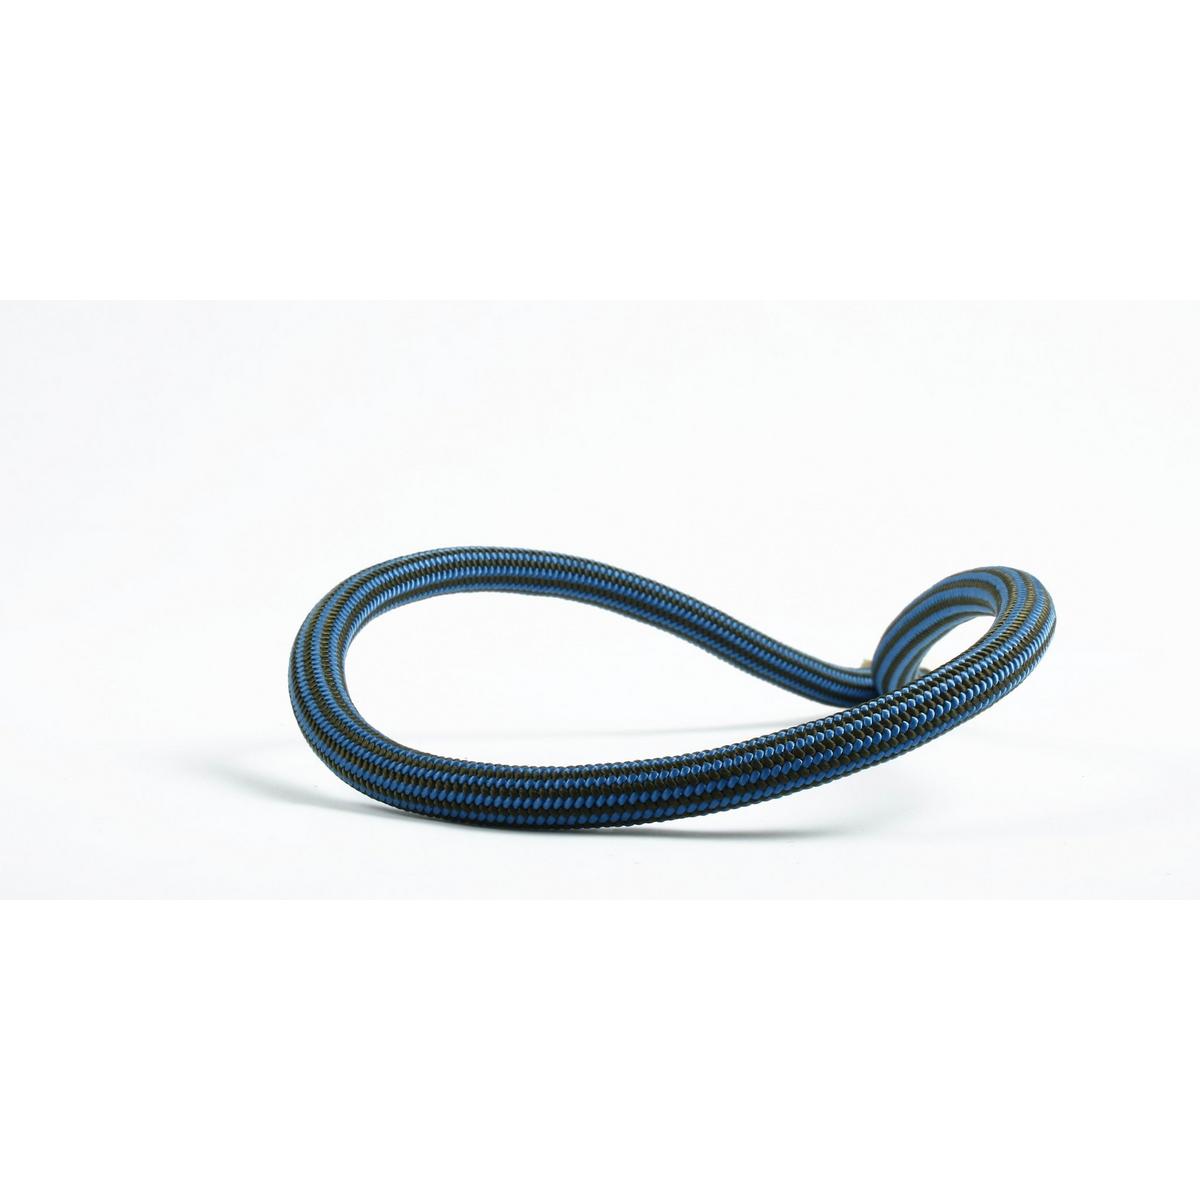 Edelweis Lithium 2 8.5mm Climbing Rope 60M - Blue Black